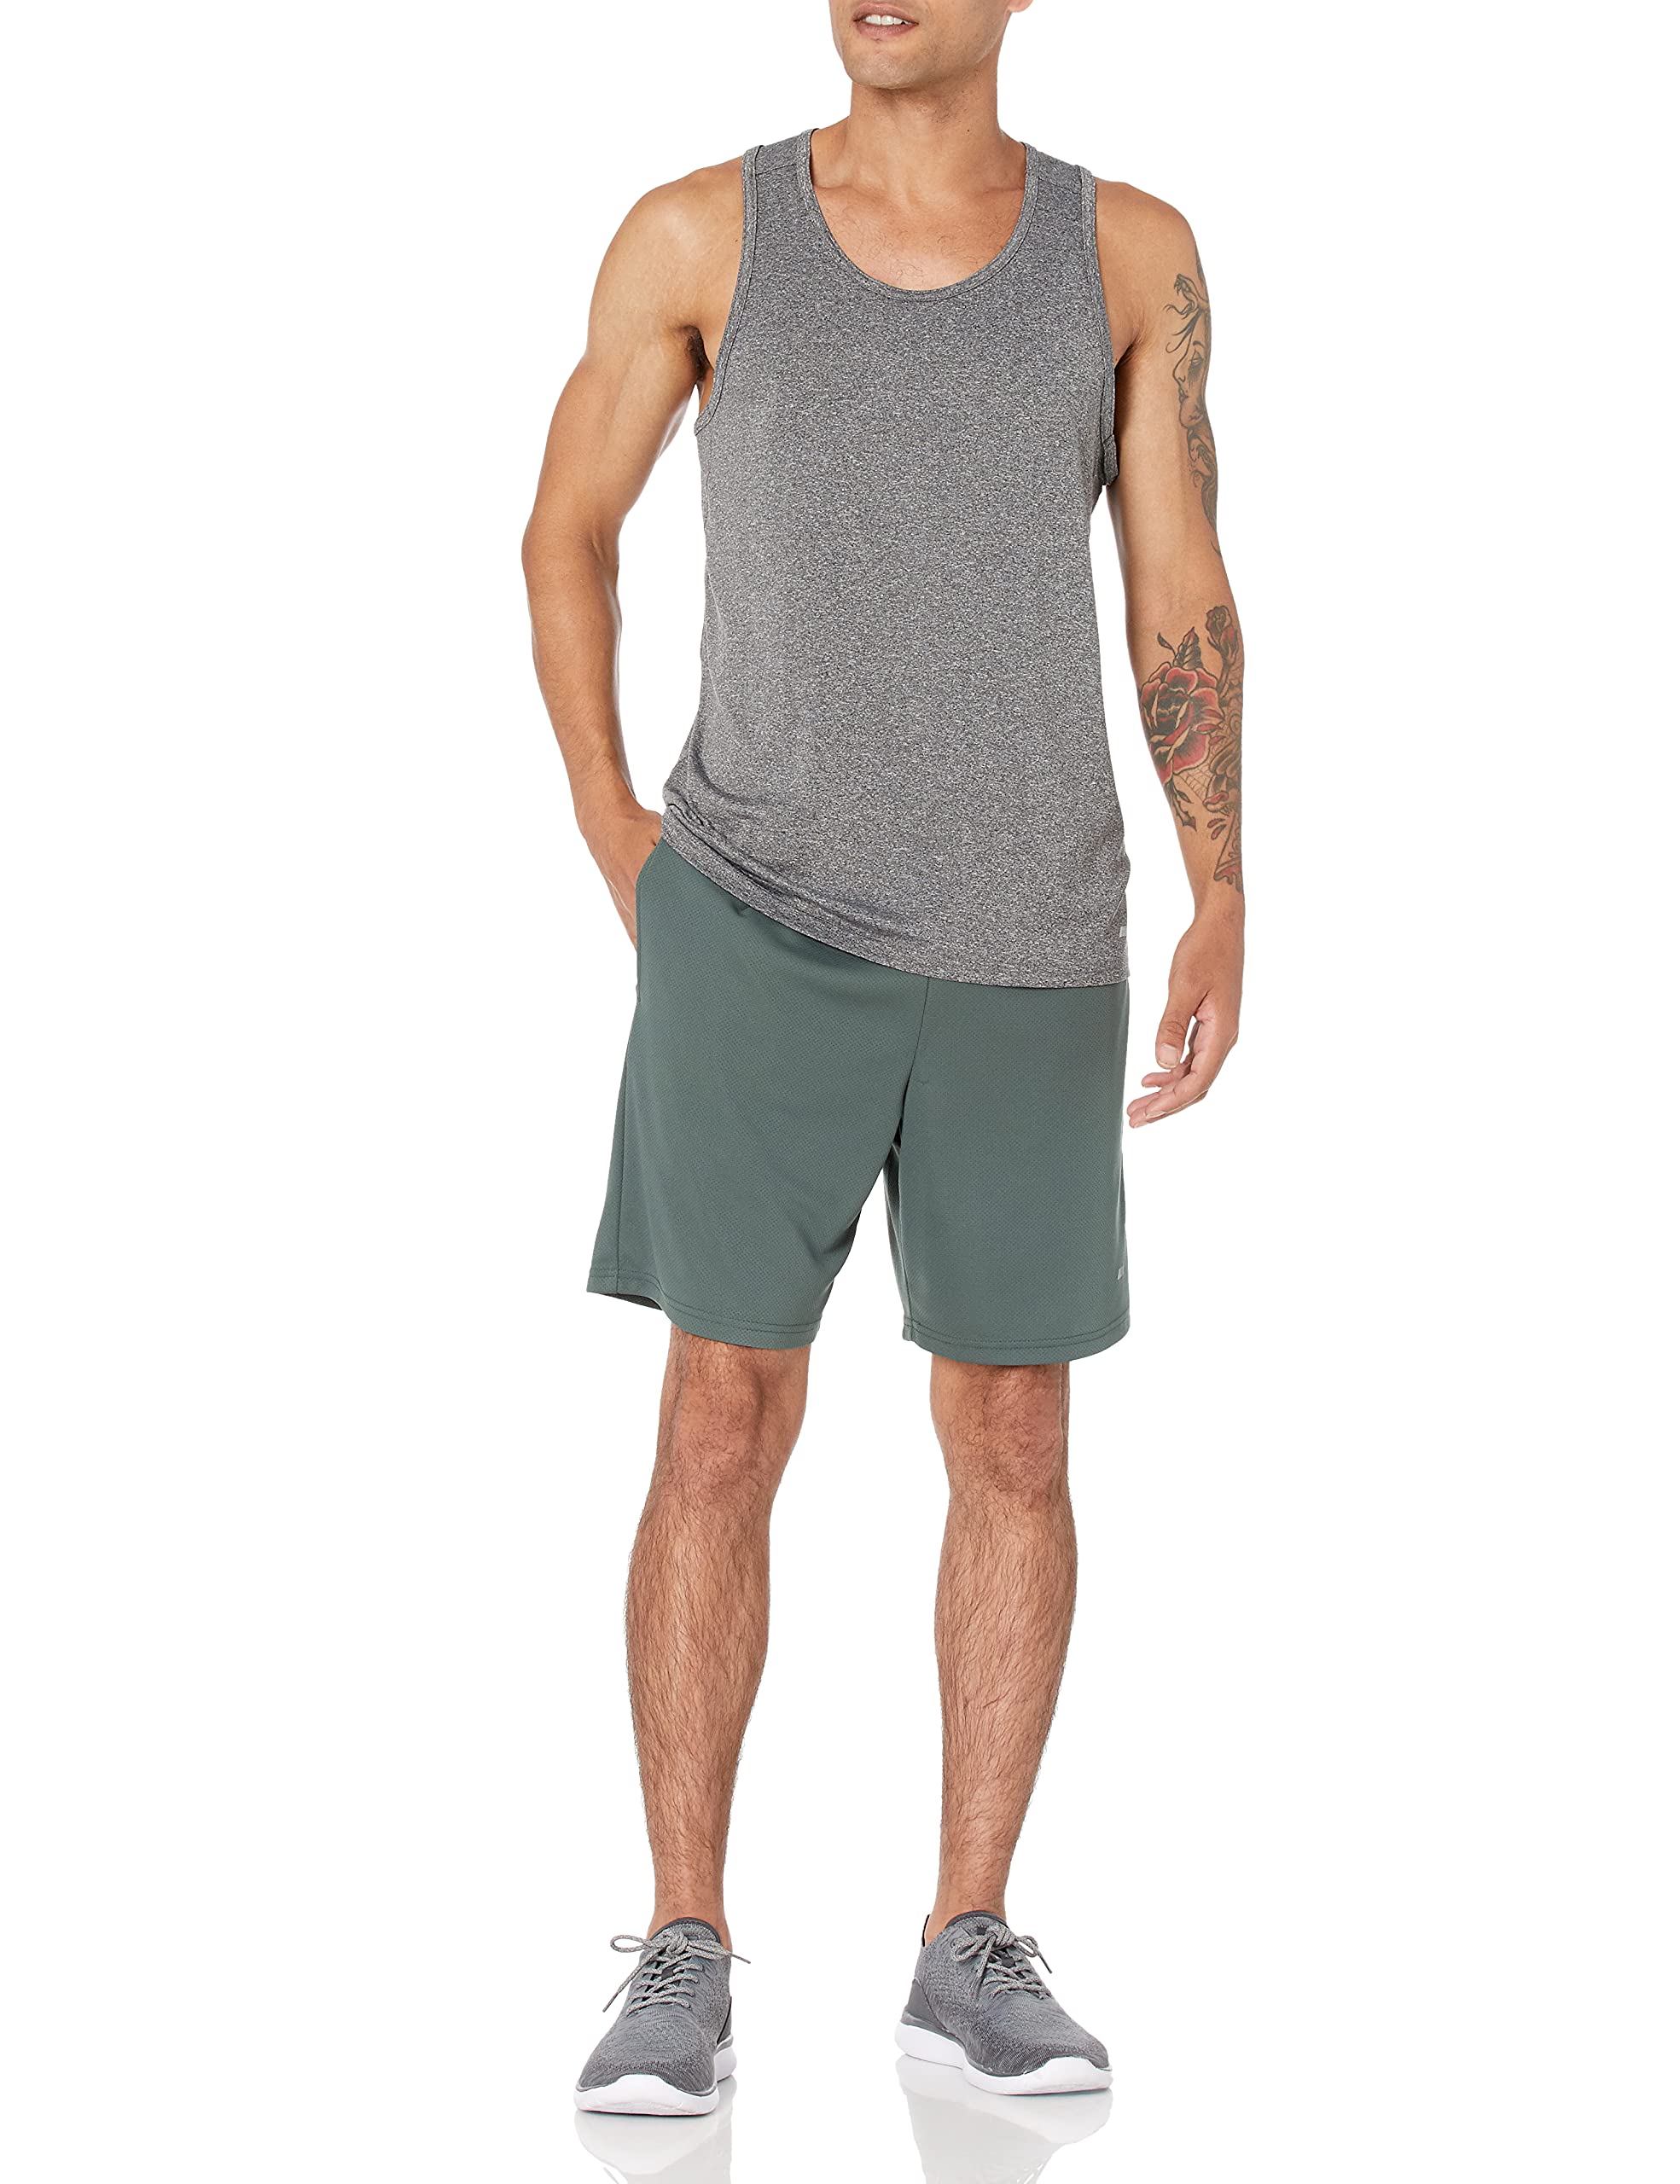 Amazon Essentials Men's Tech Stretch Tank T-Shirt